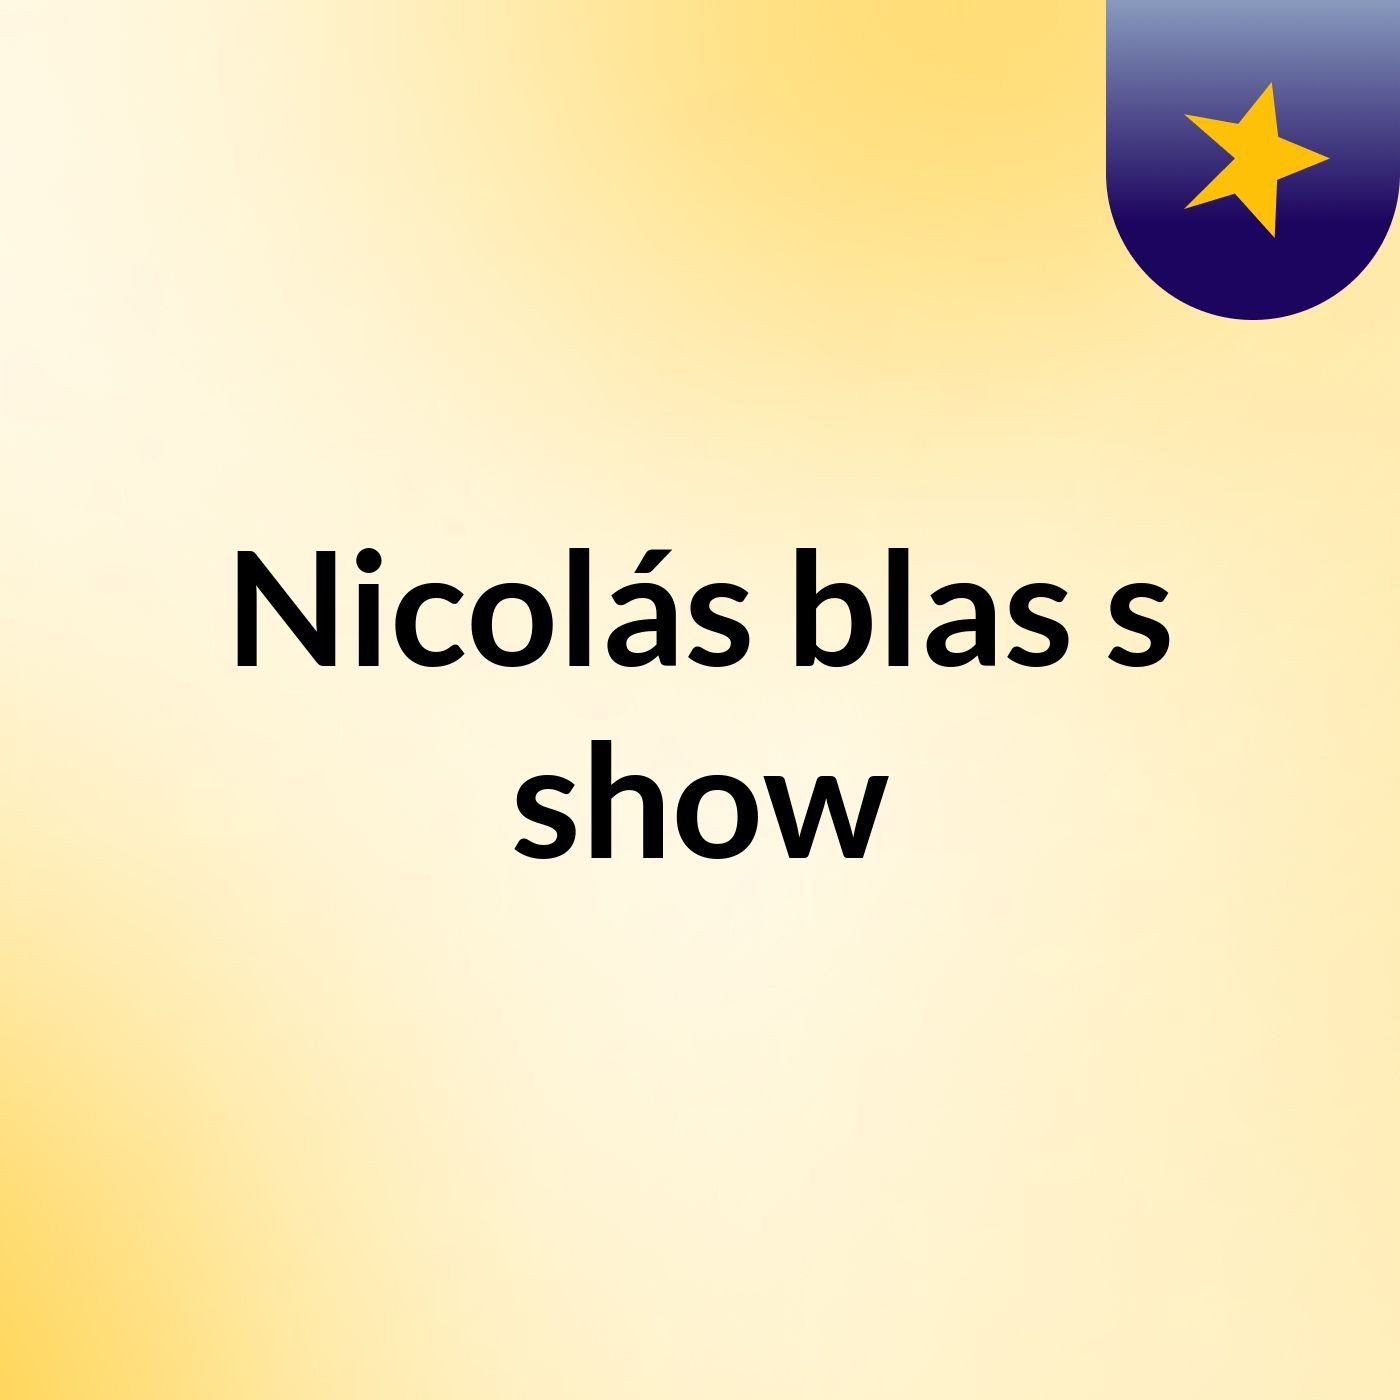 Nicolás blas's show